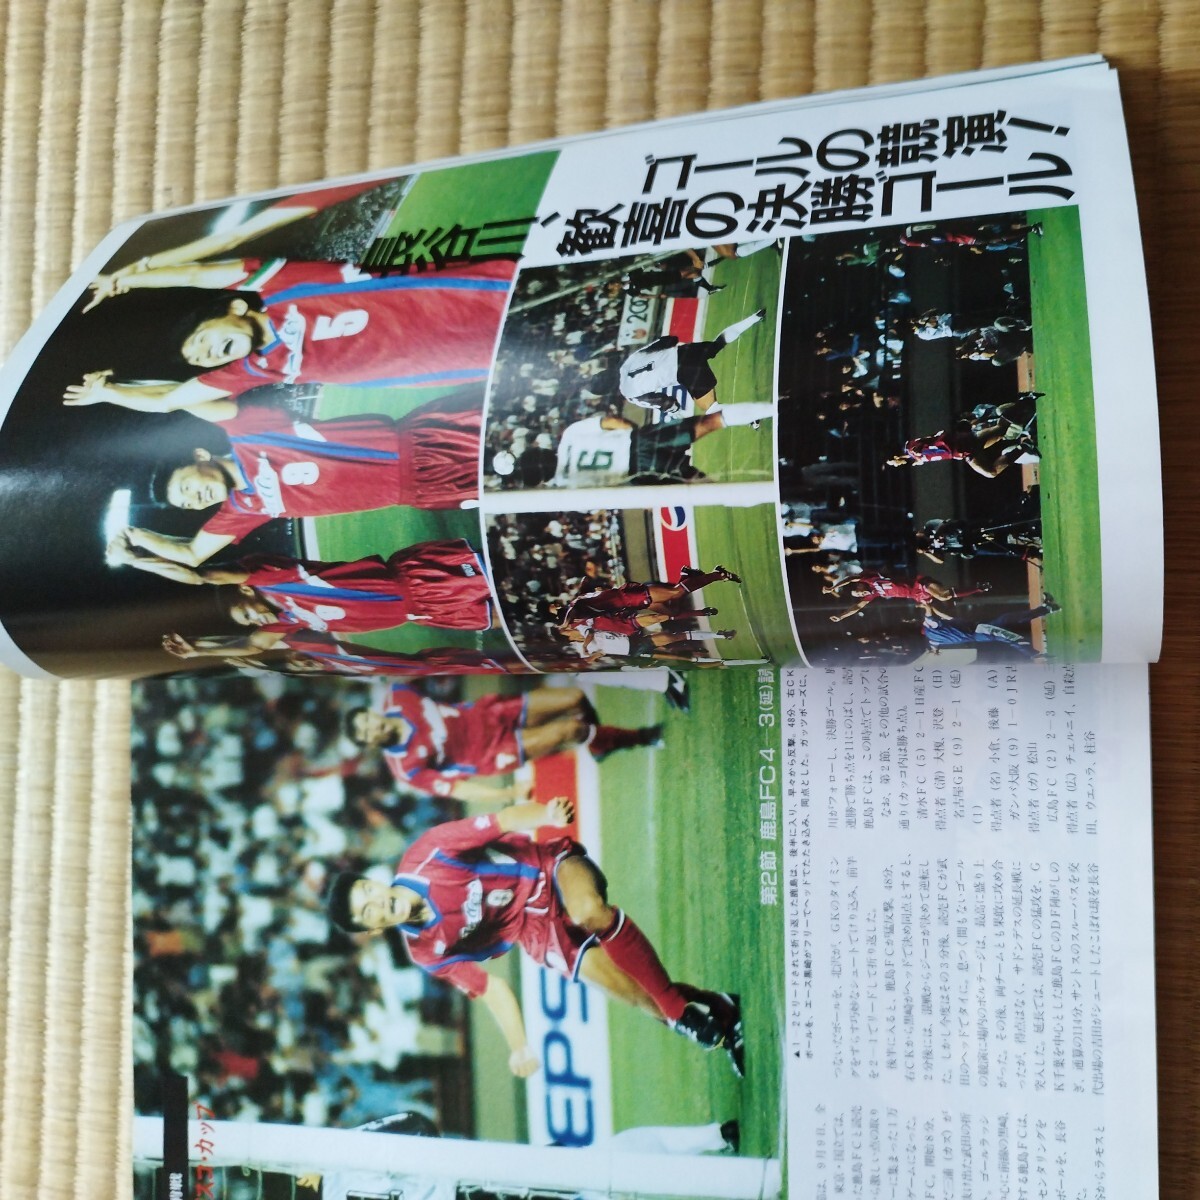  soccer magazine 11/1992 Japan representative Dyna s tea cup champion's title three .. good .. Club Barcelona 